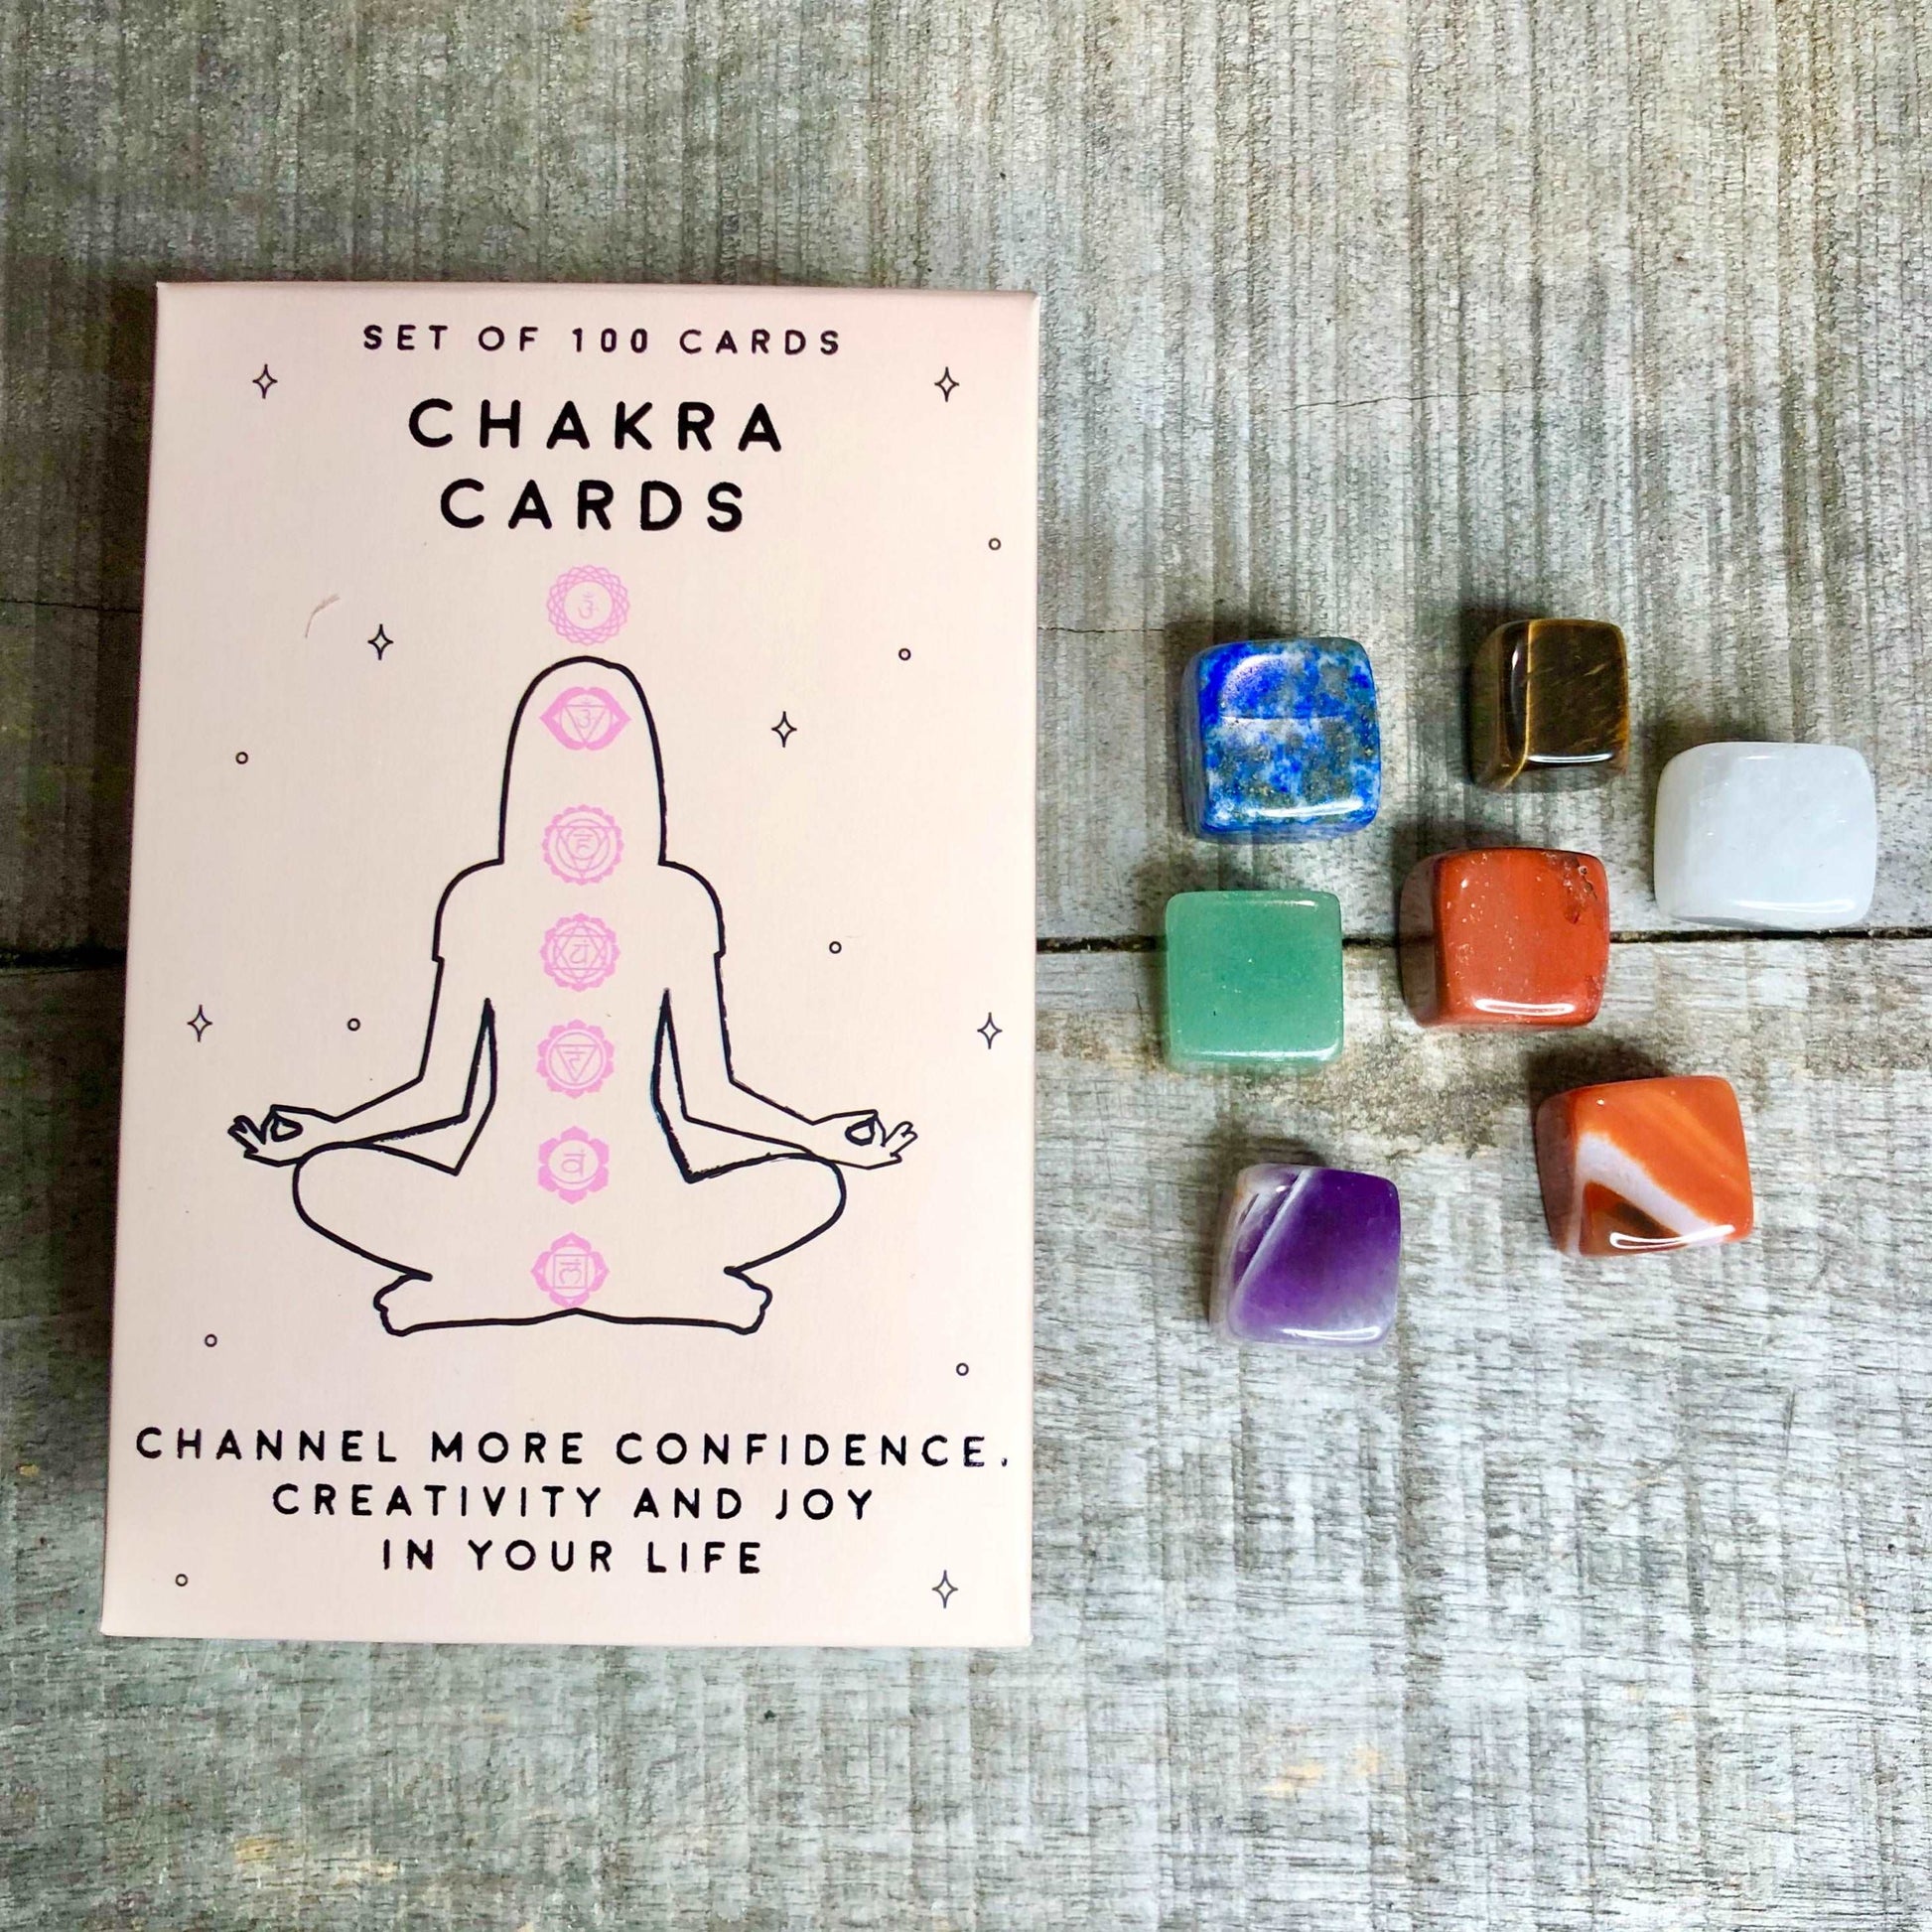 Chakra wisdom tarot reading card set plus chakra pyramid or tower